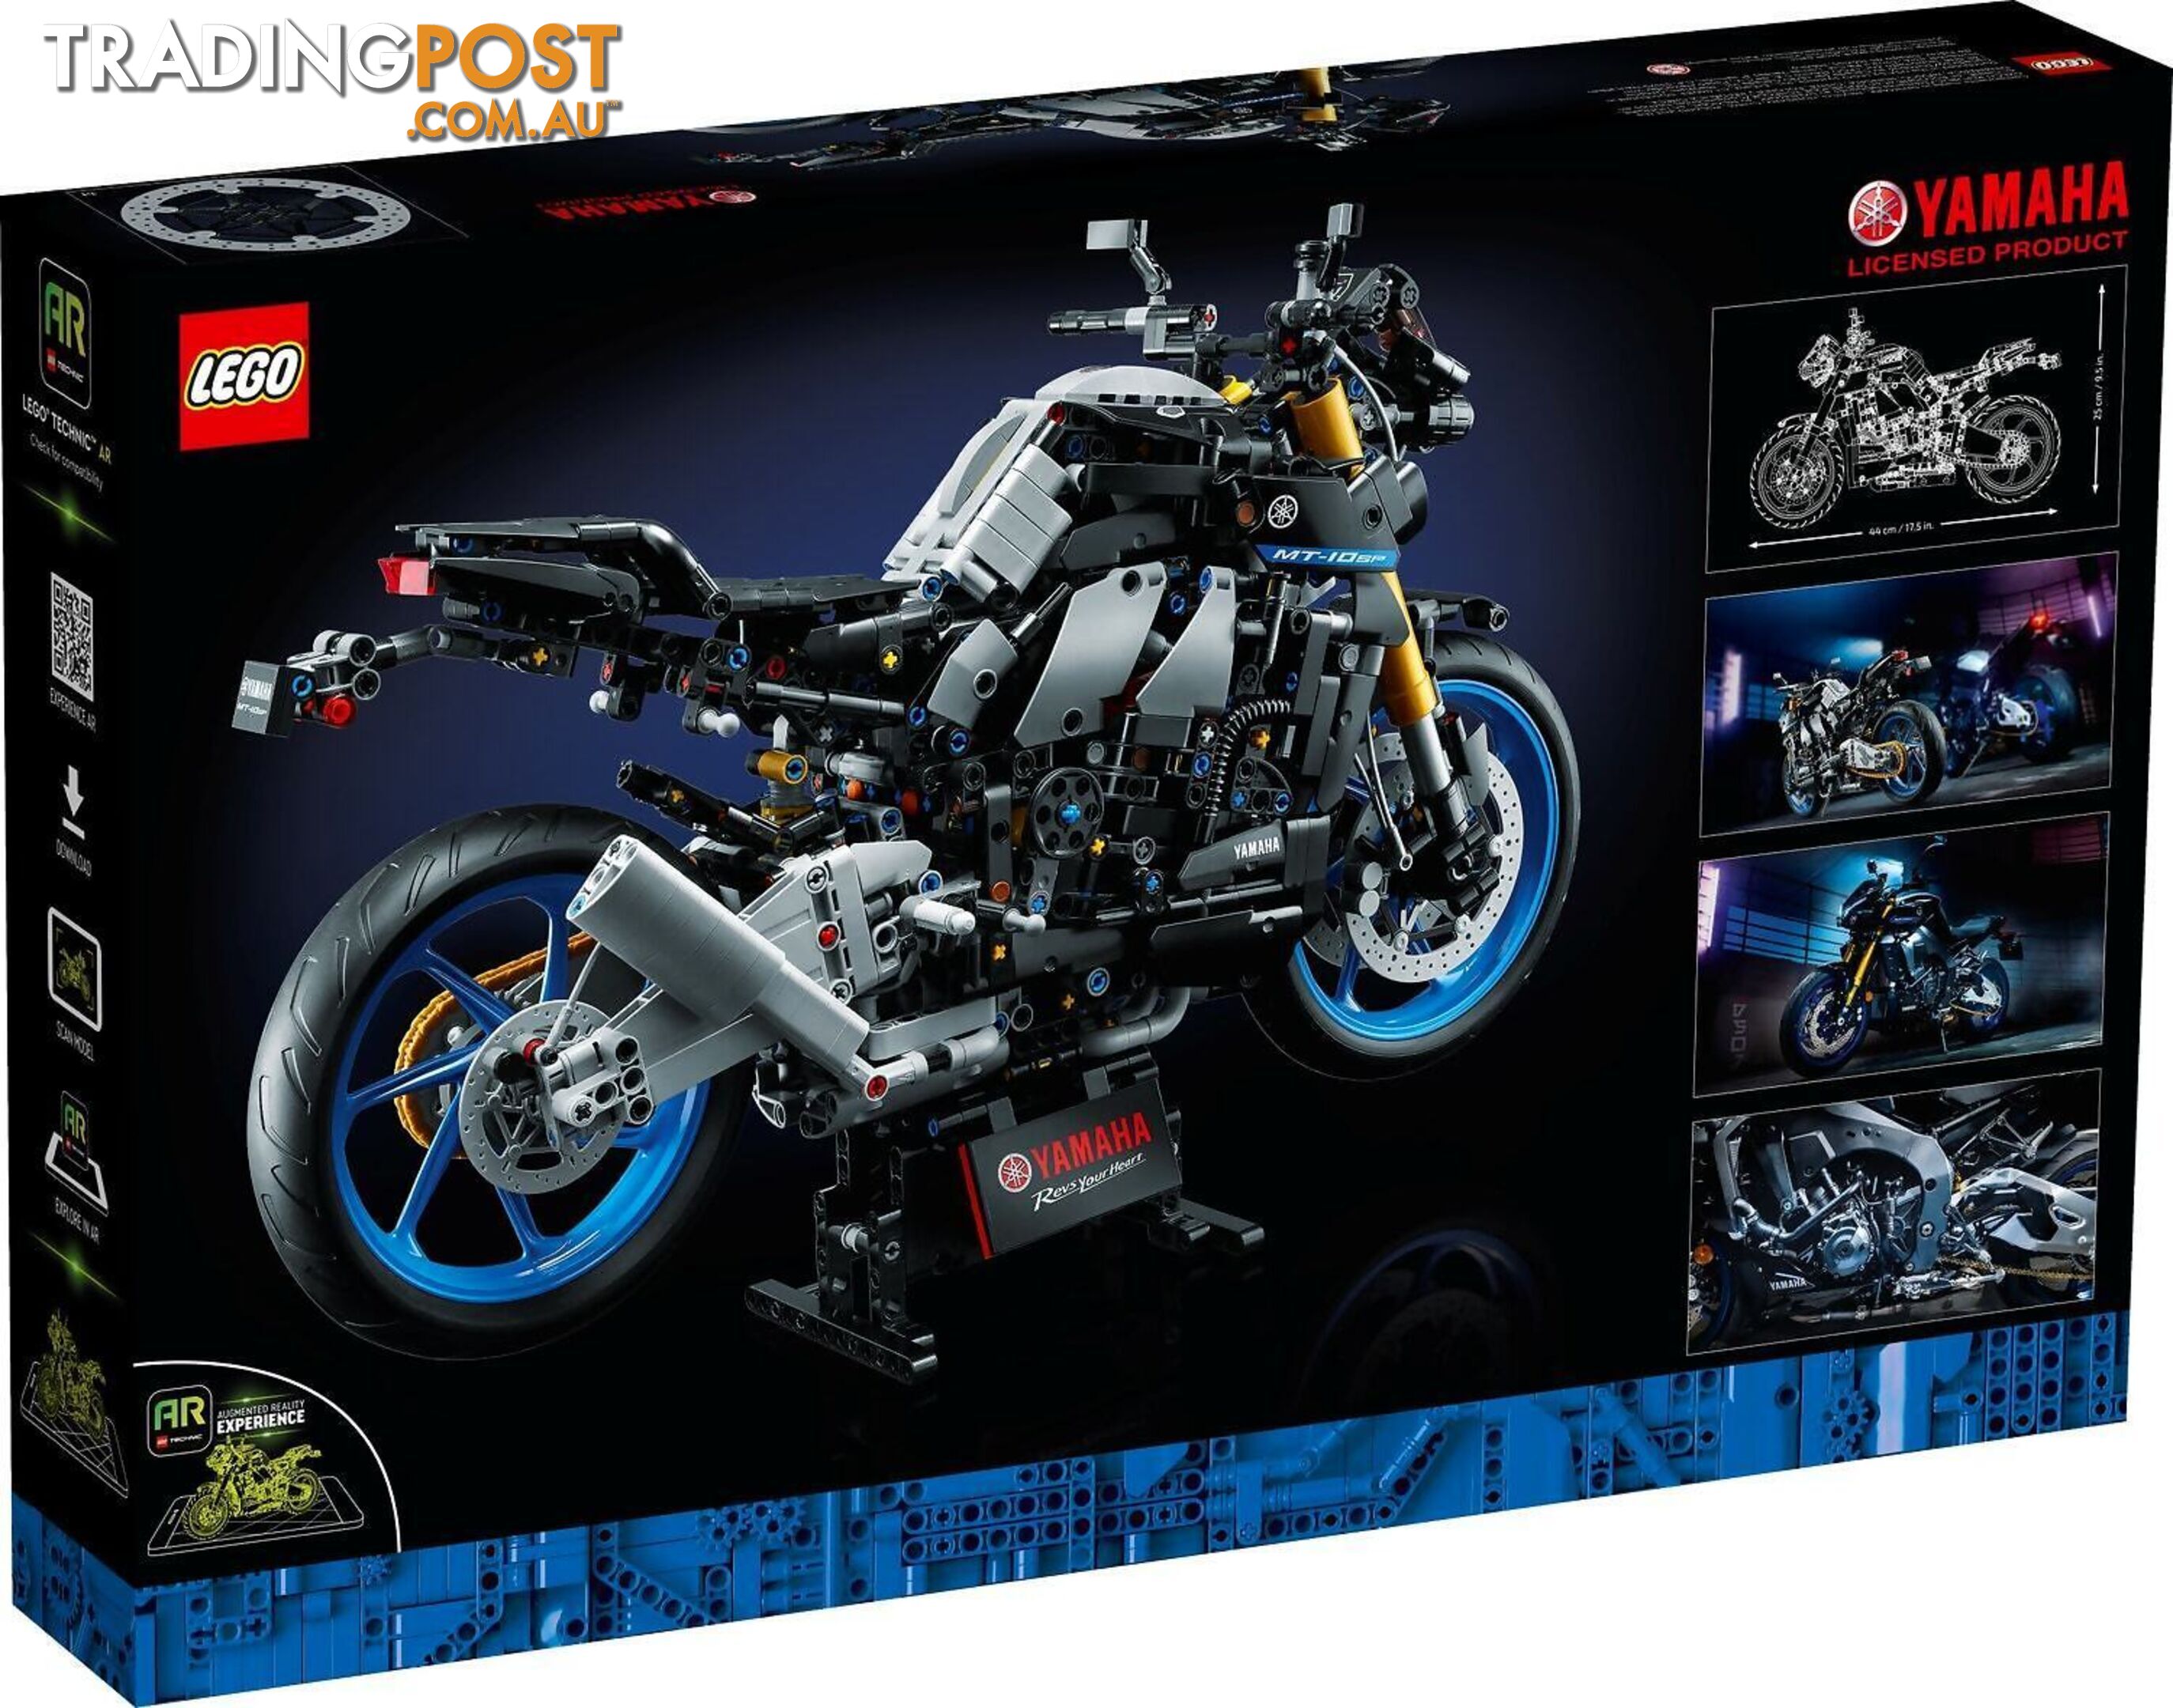 LEGO 42159 Yamaha MT-10 SP - Technic - 5702017425191